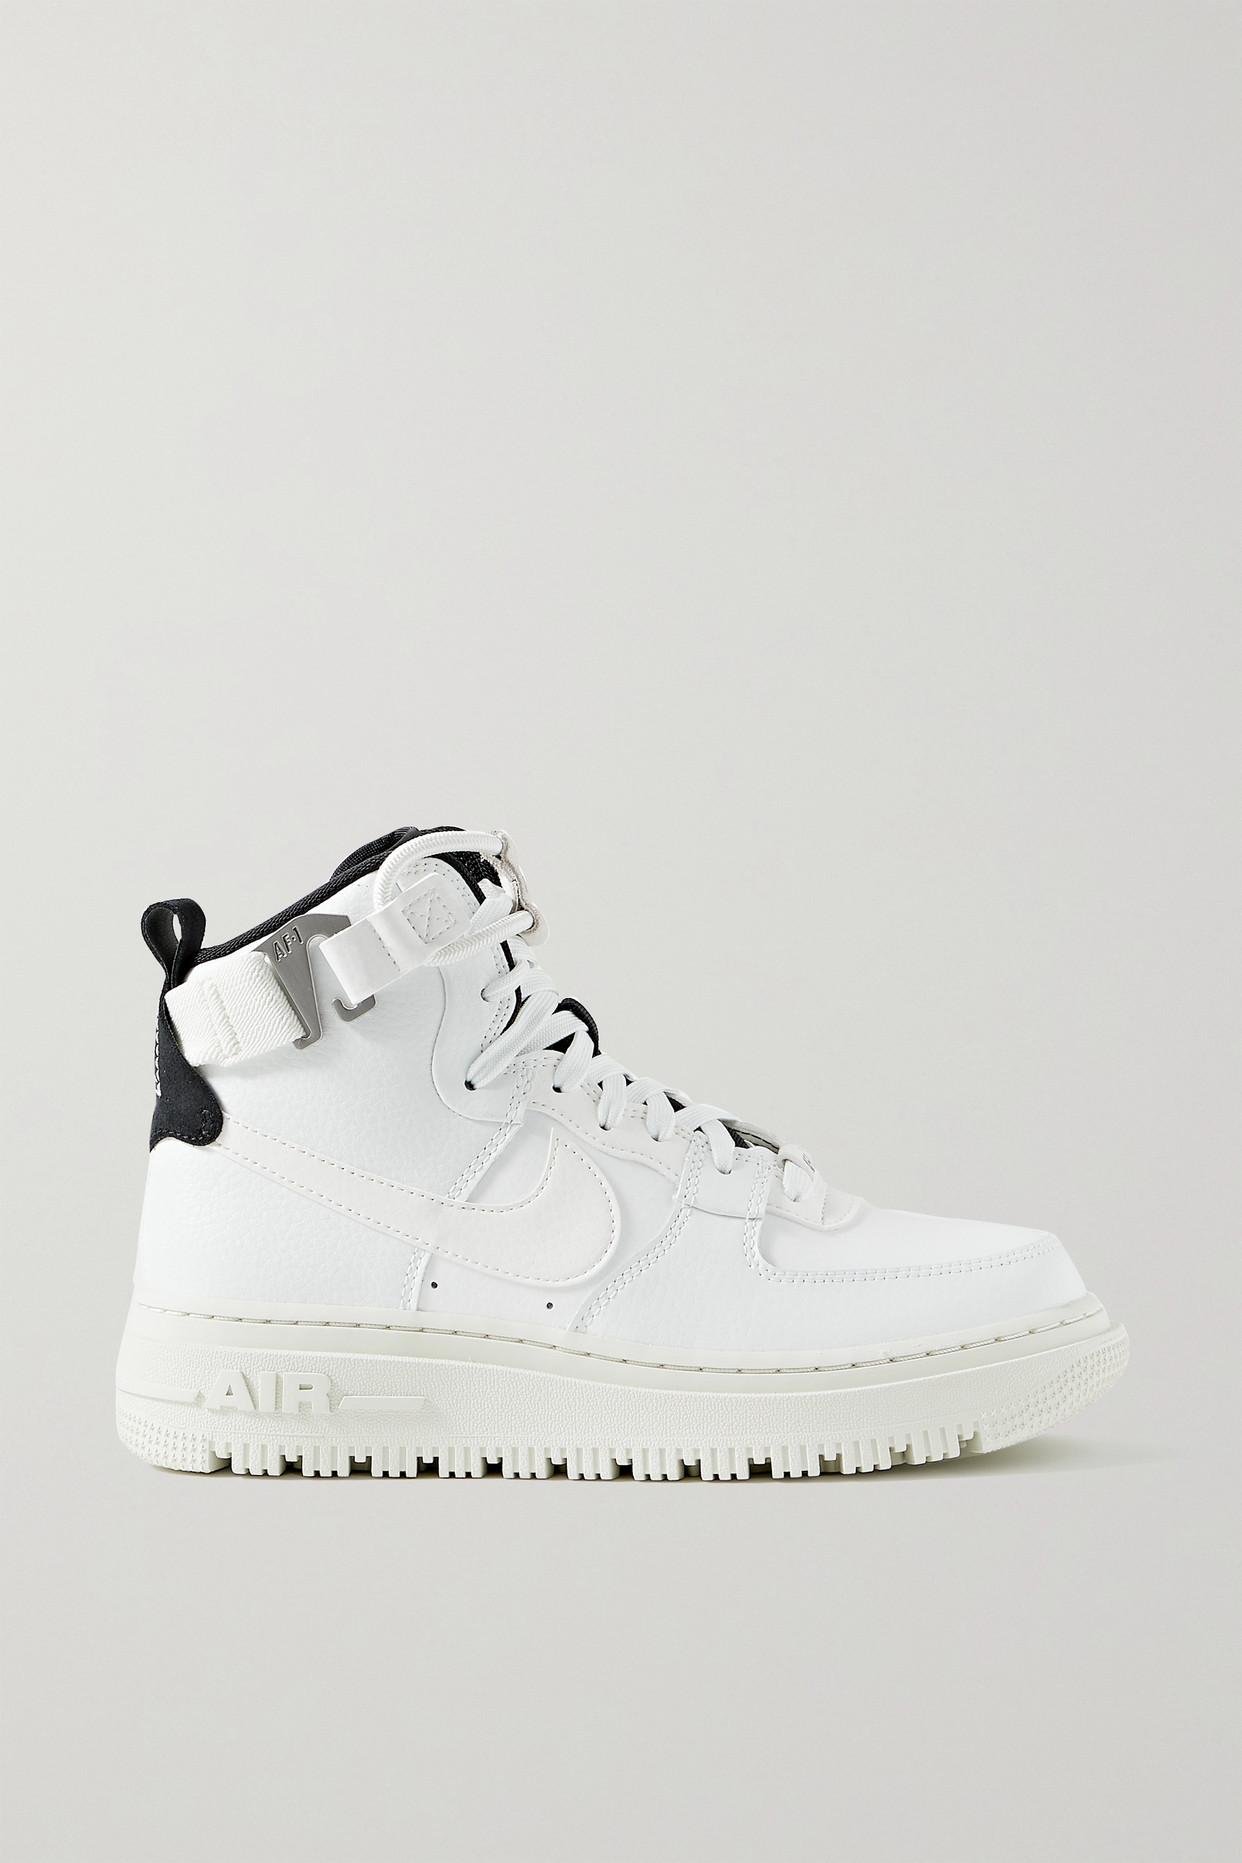 Onderhandelen roddel Doordringen Nike Air Force 1 High Utility 2.0 Suede And Textured-leather Sneakers in  White | Lyst